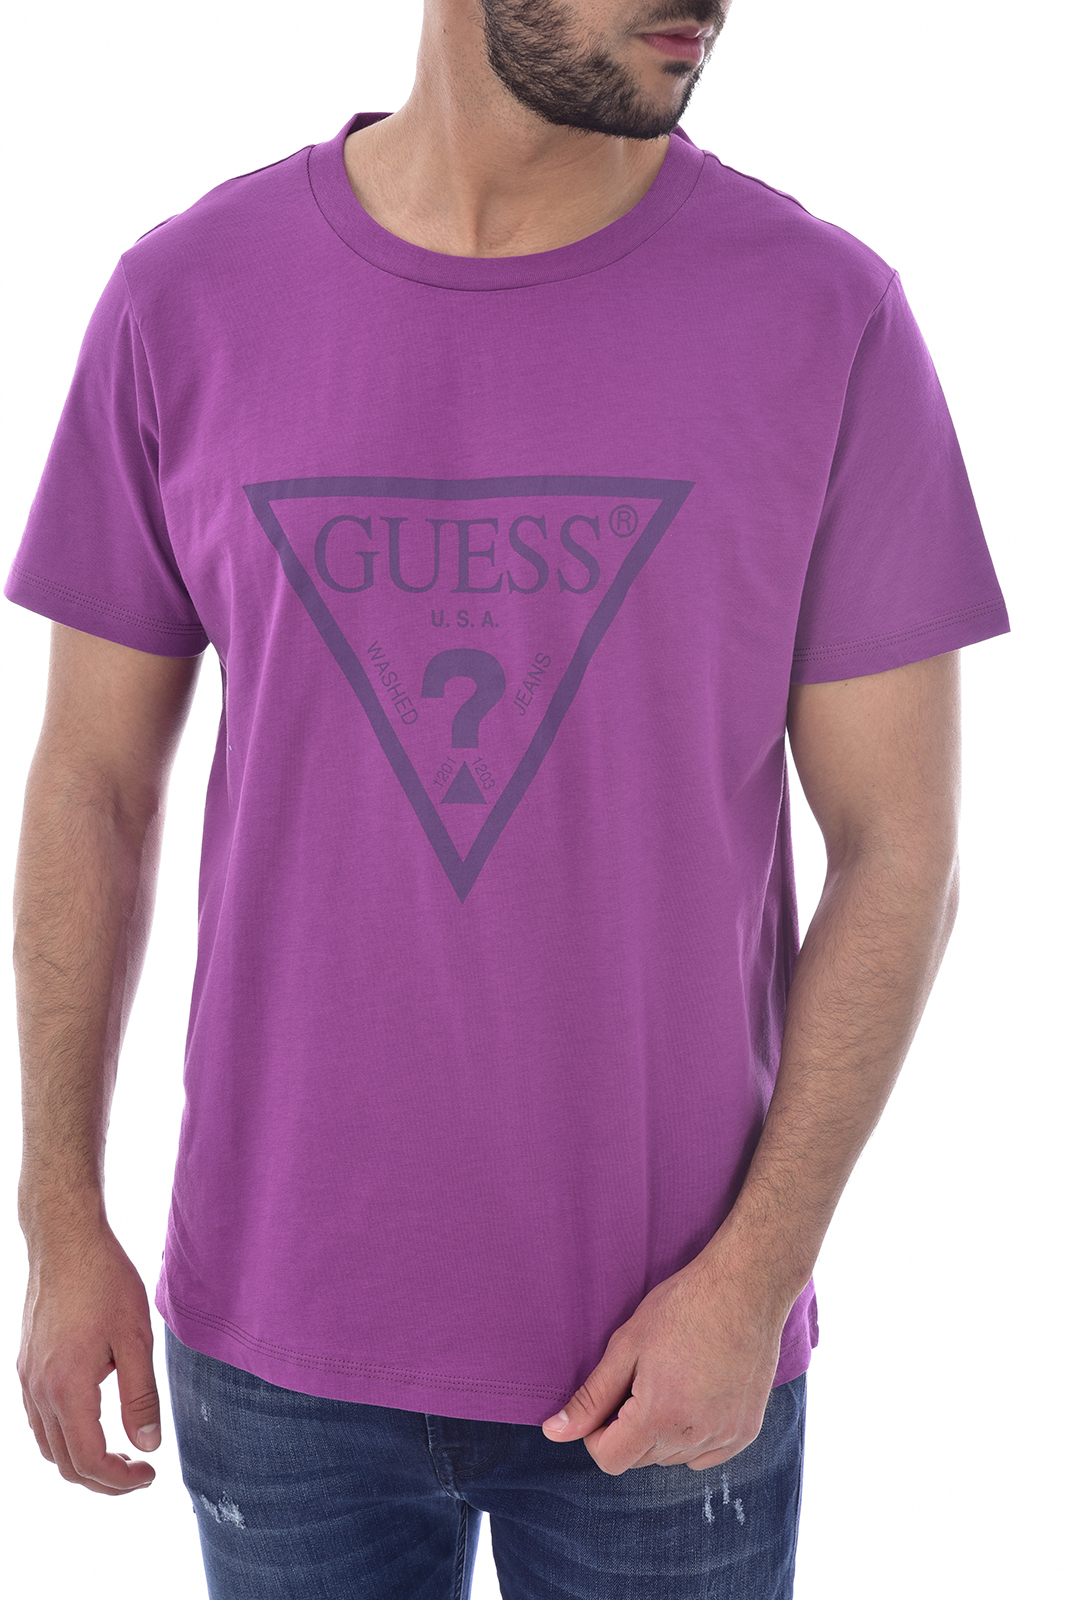 Guess Tee-shirt Violet À Manches Courtes Logo F92i00 Jr03d